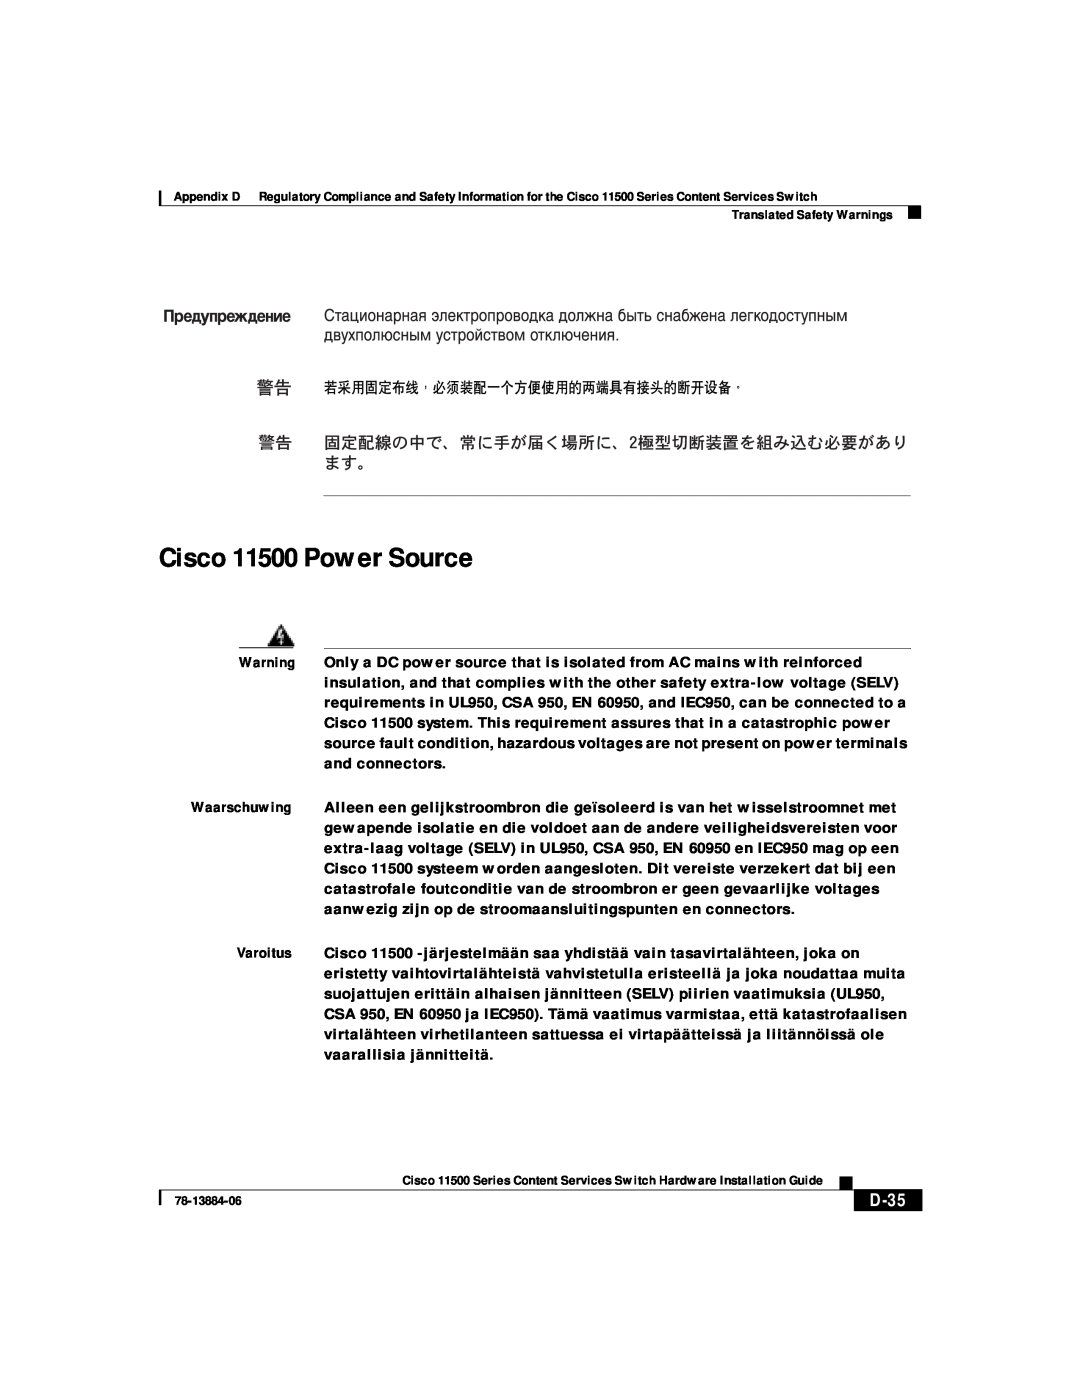 Cisco Systems 11500 Series manual Cisco 11500 Power Source, D-35 